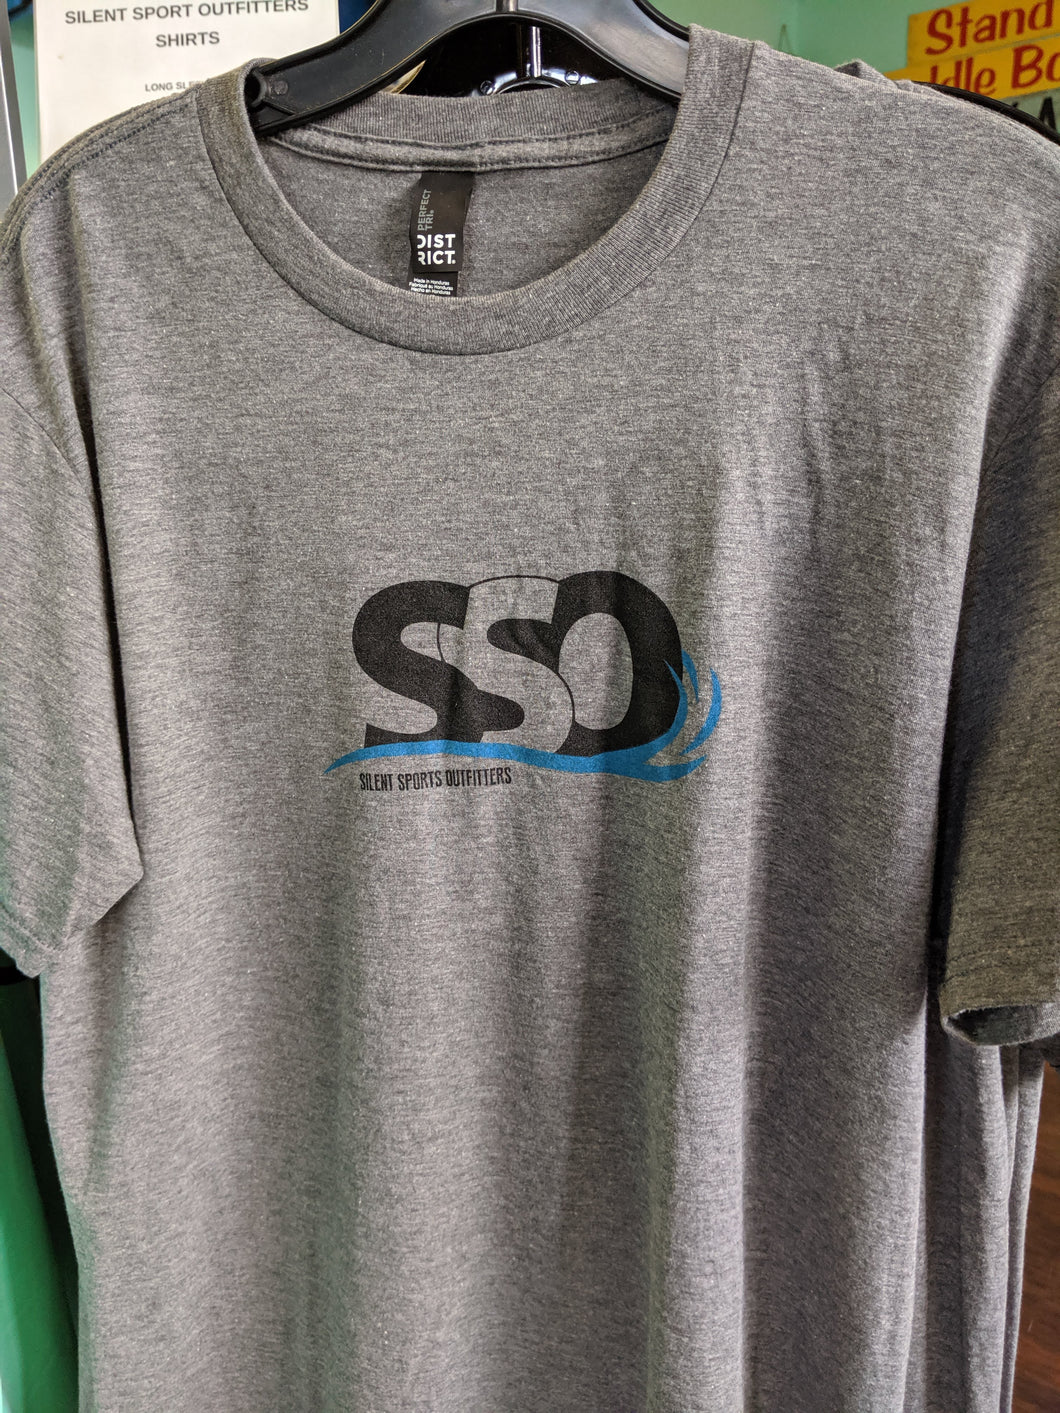 SSO T-Shirt